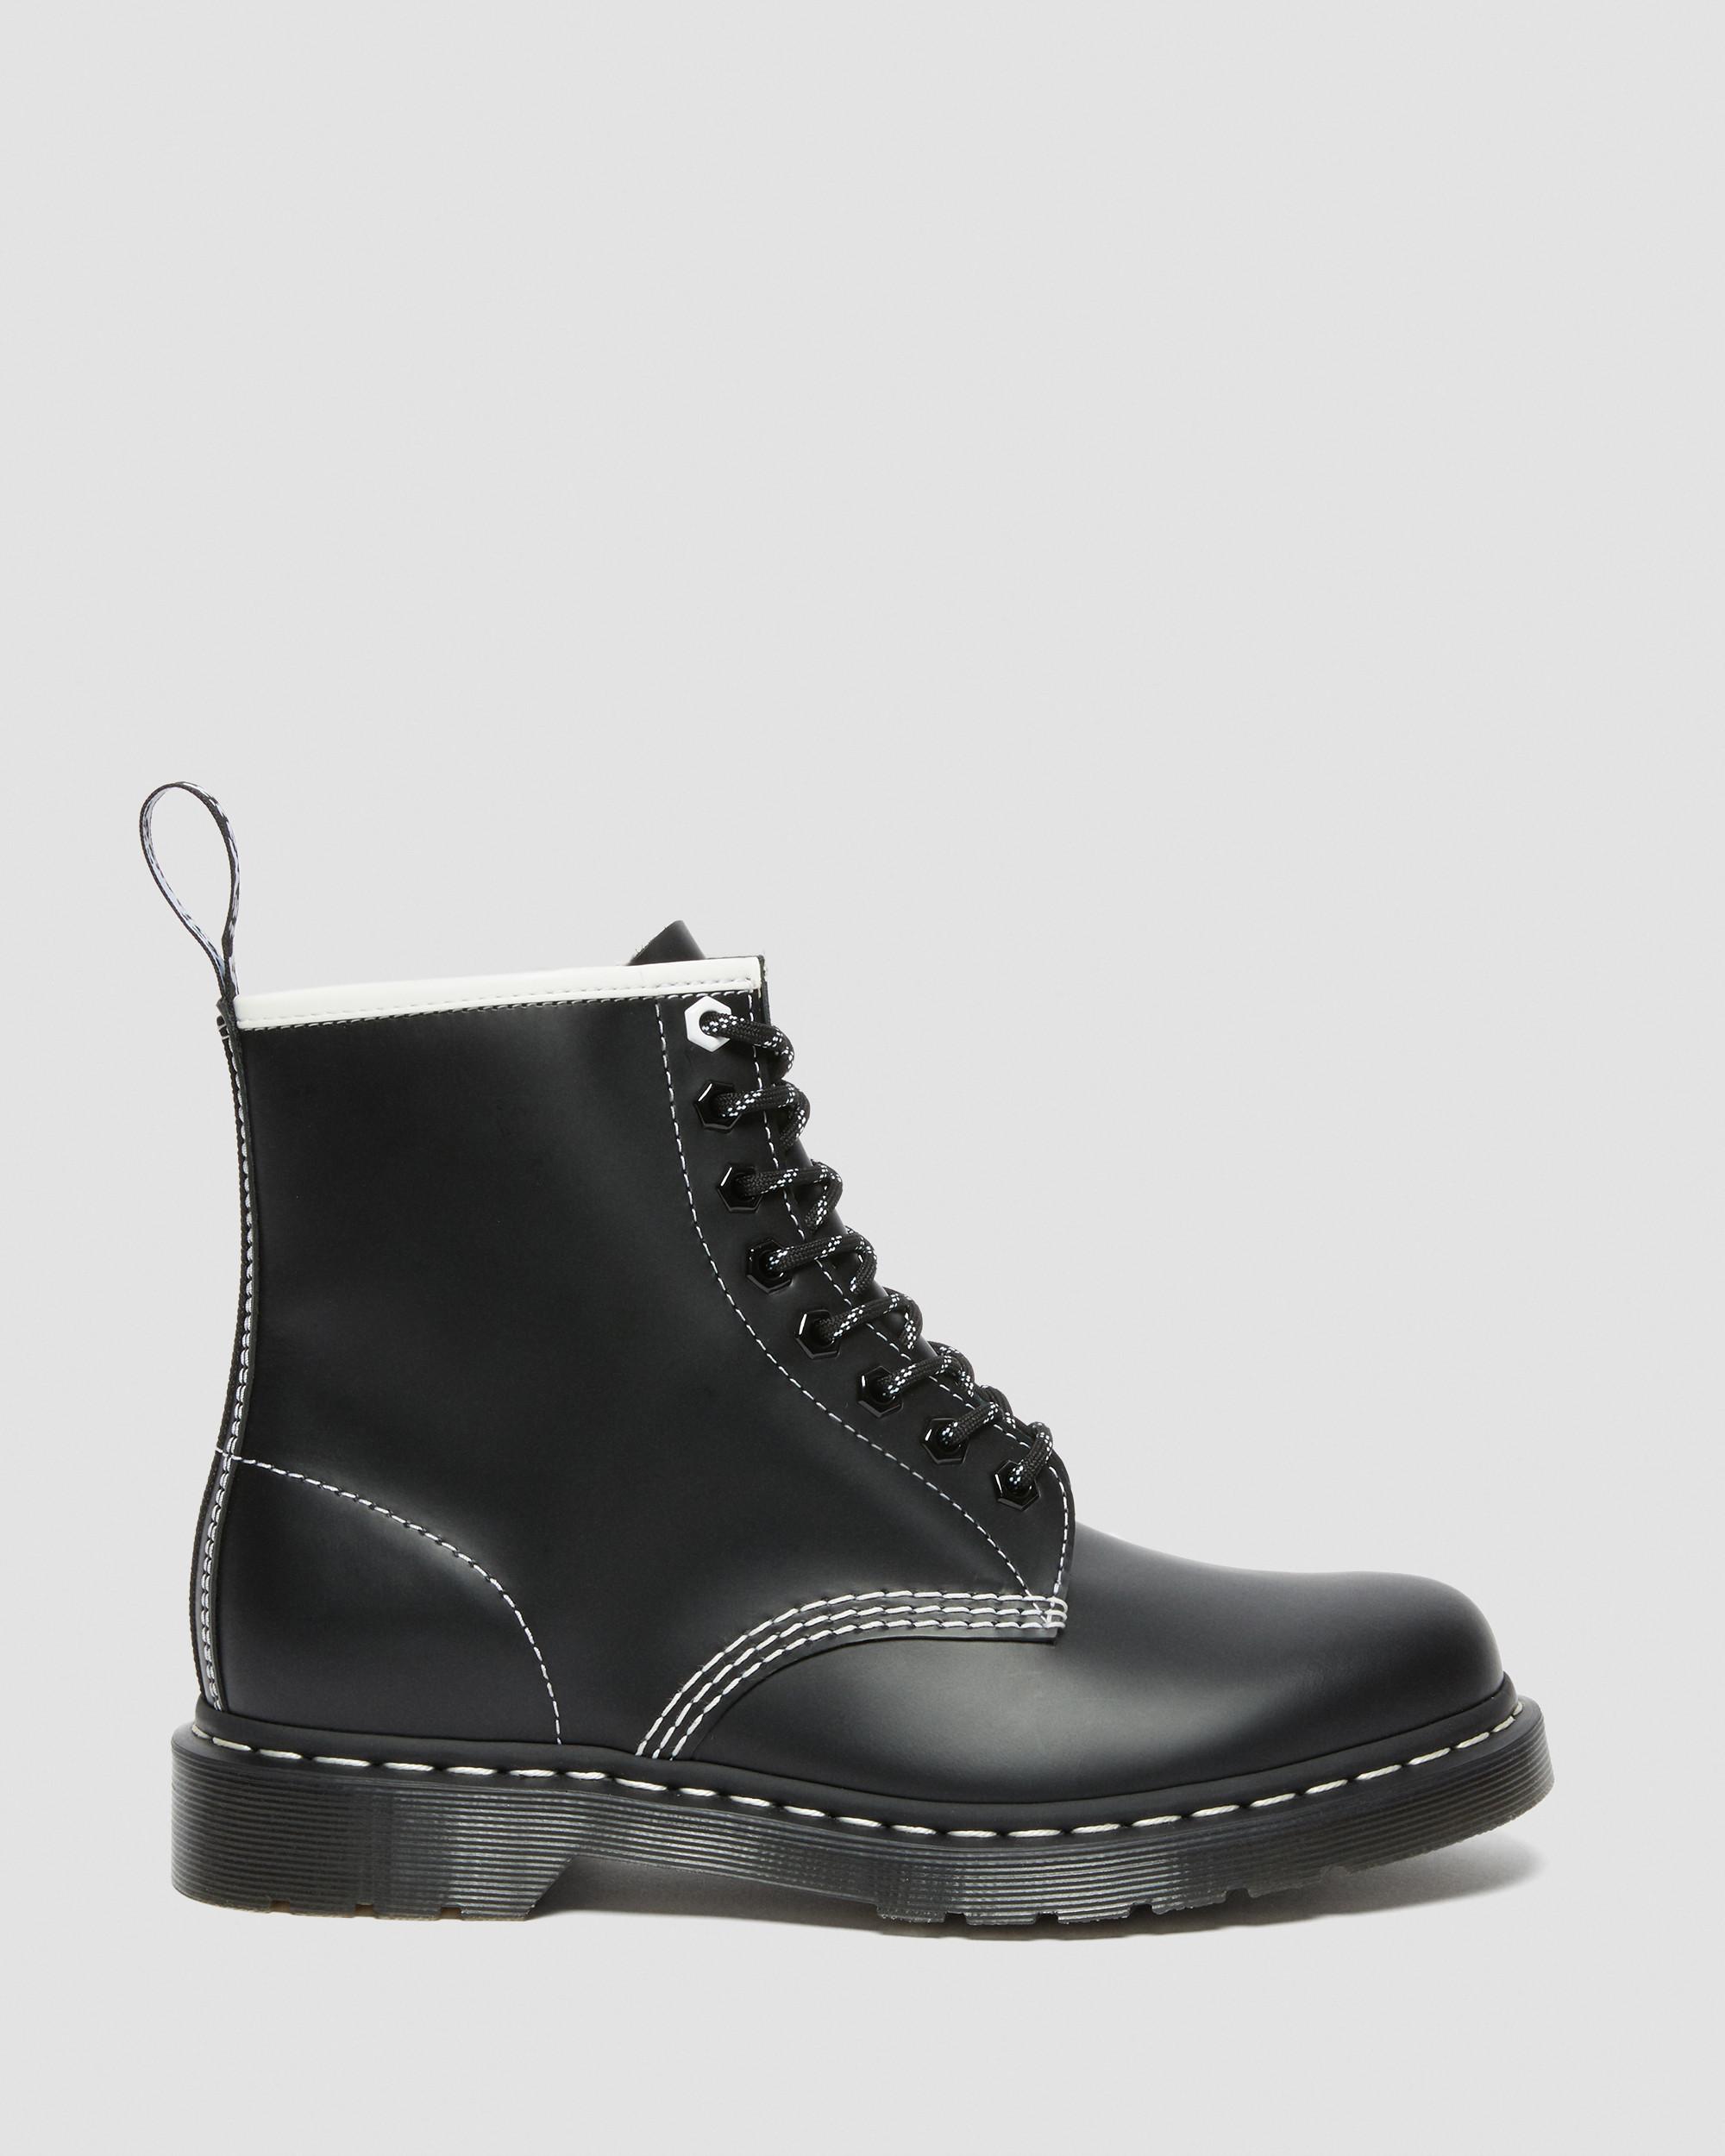 1460 Contrast Stitch Leather Lace Up Boots, Black | Dr. Martens